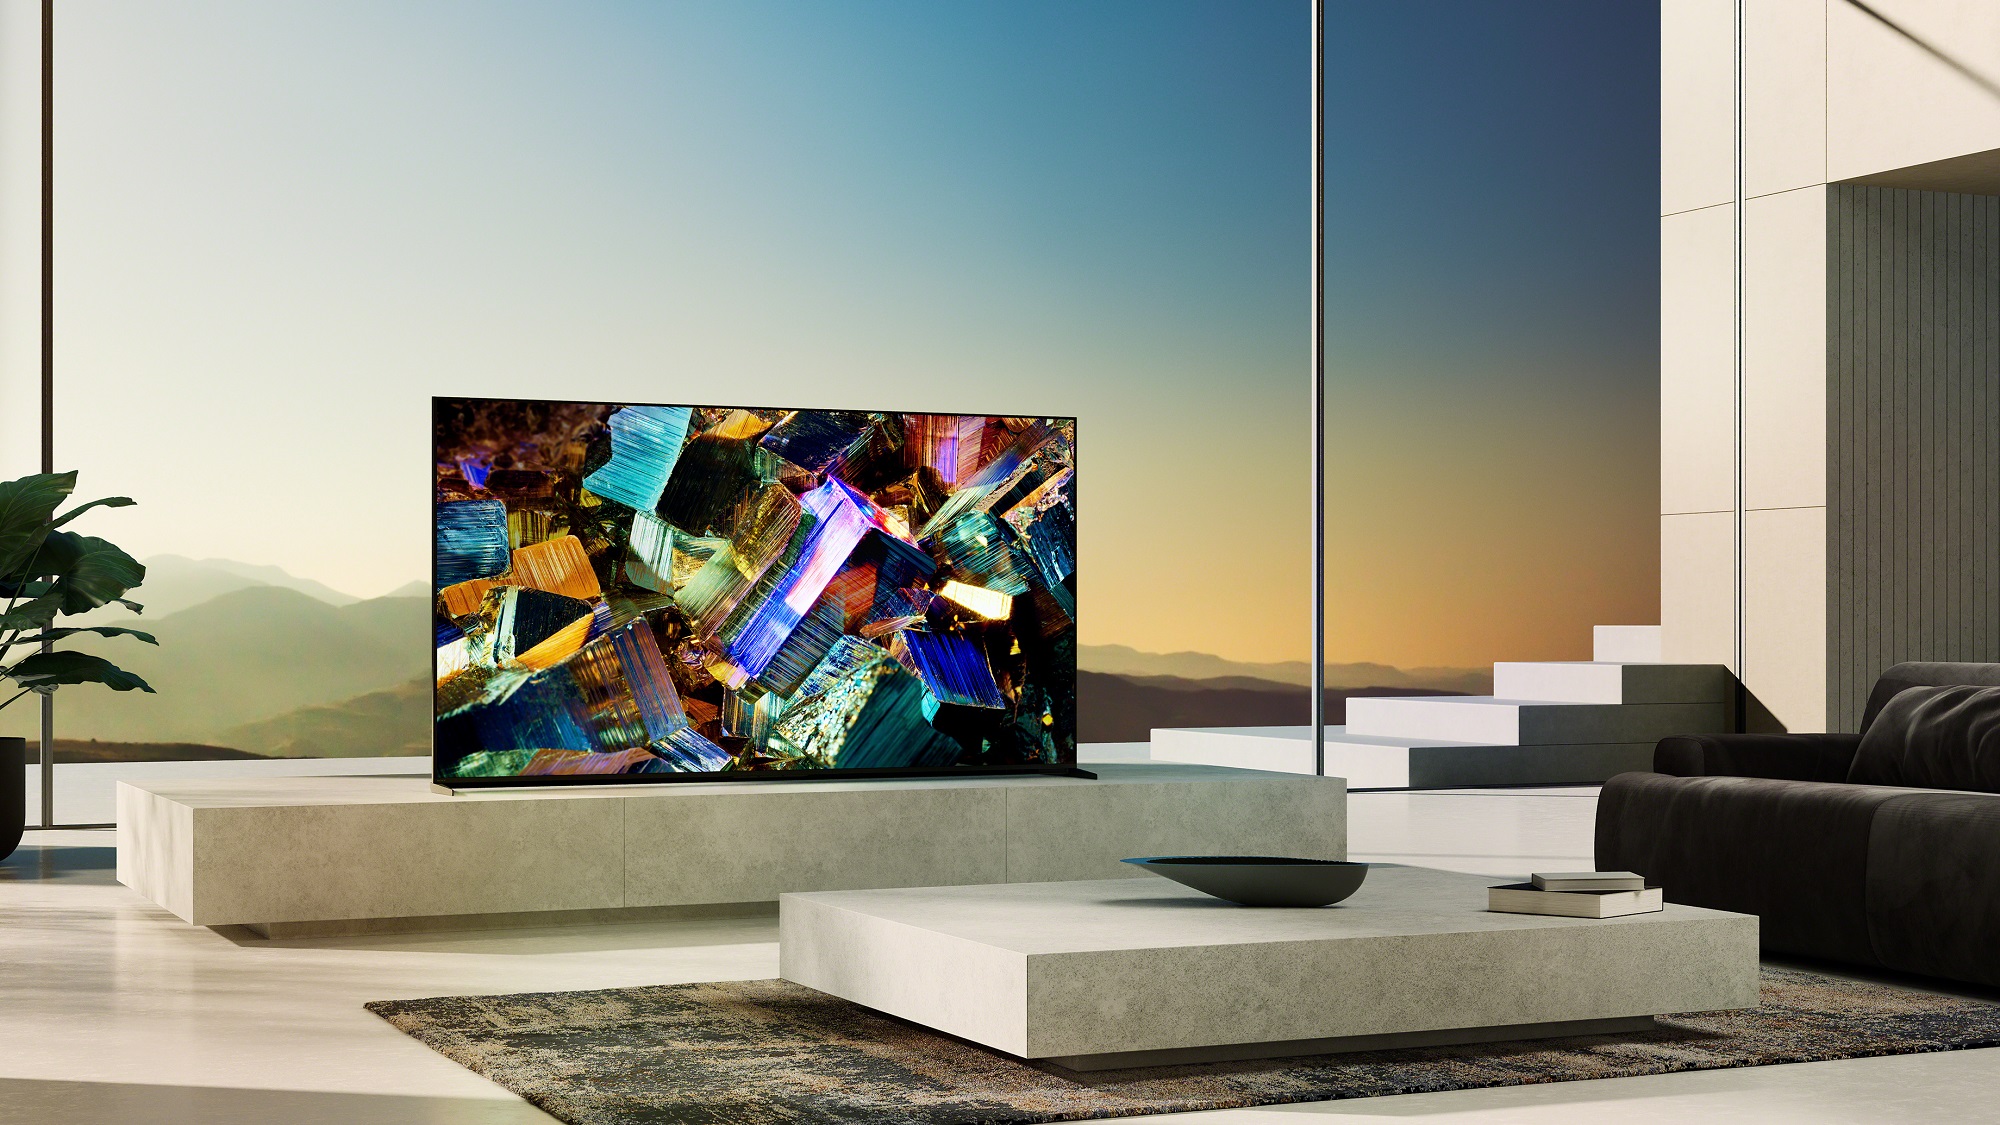 Sony Z9K Mini LED television in brightly lit modern room.